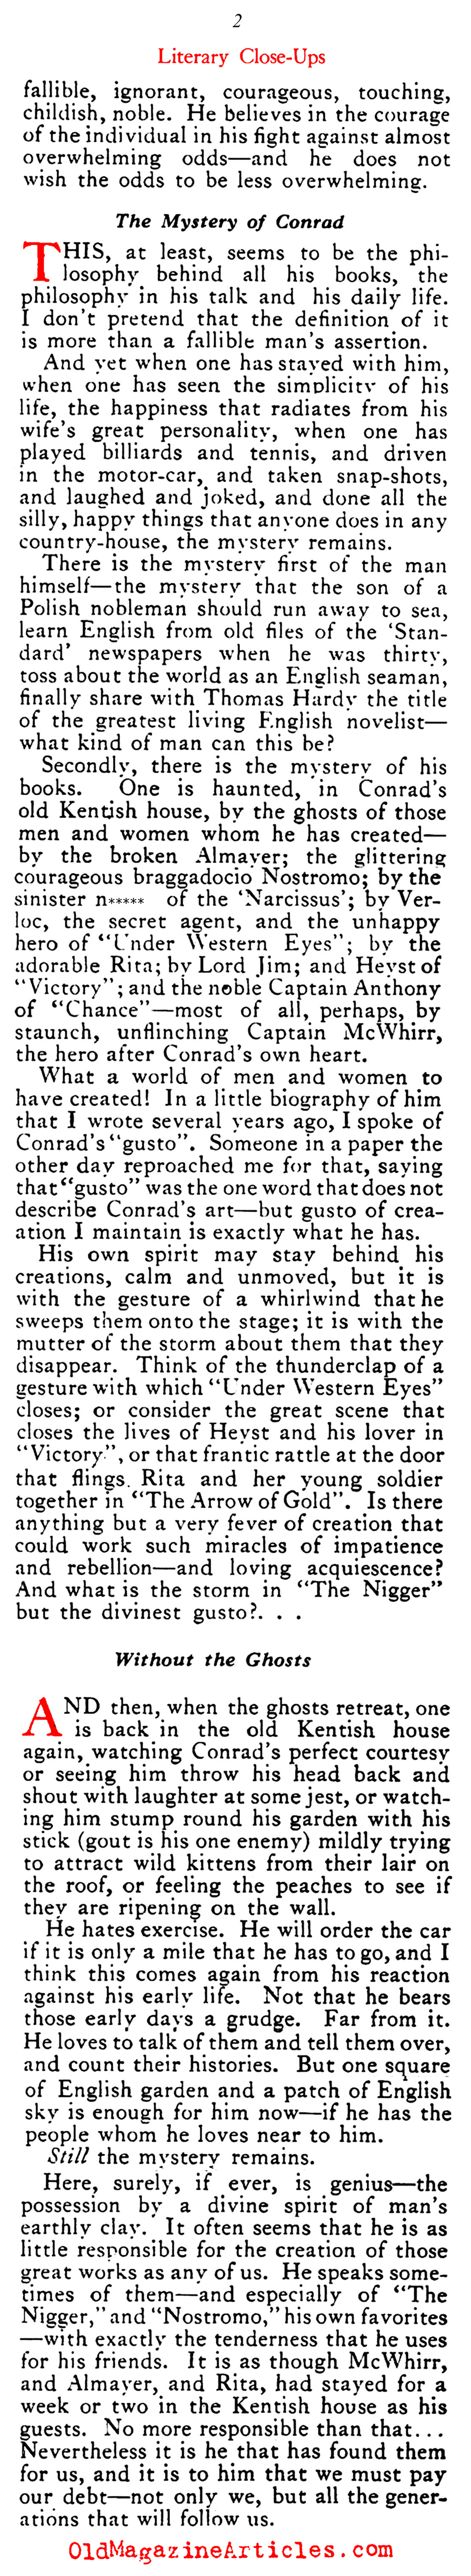 Joseph Conrad as Interviewed by Hugh Walpole (Vanity Fair, 1919)